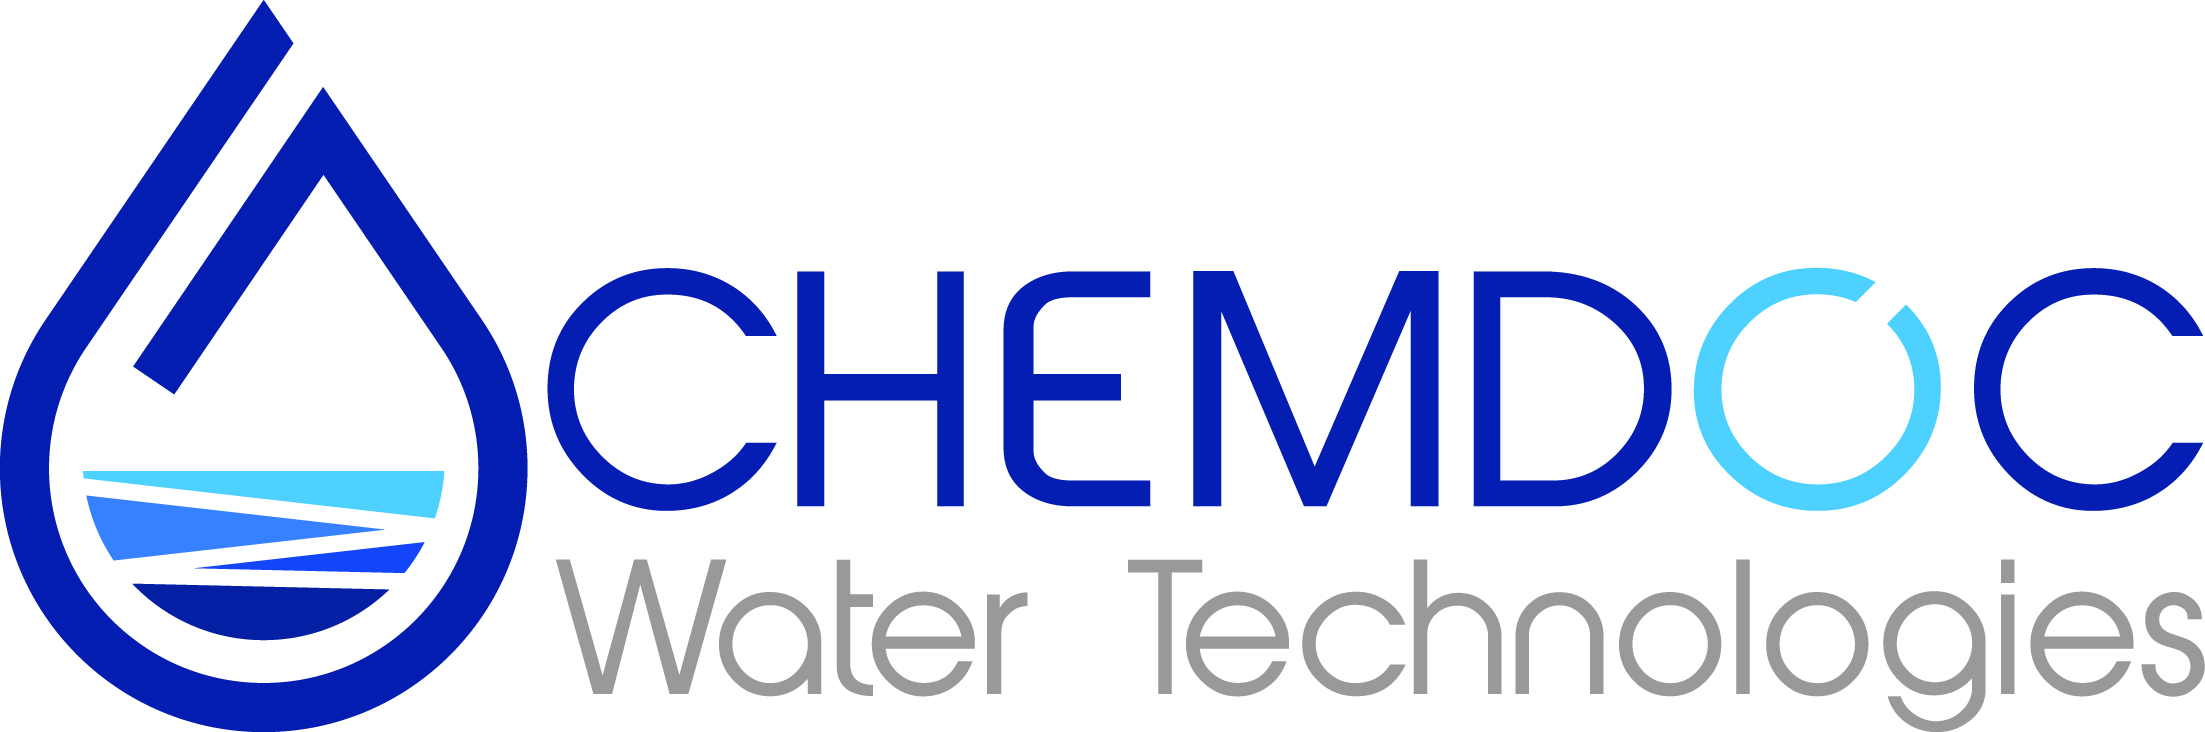 logo CHEMDOC WATER TECHNOLOGIES